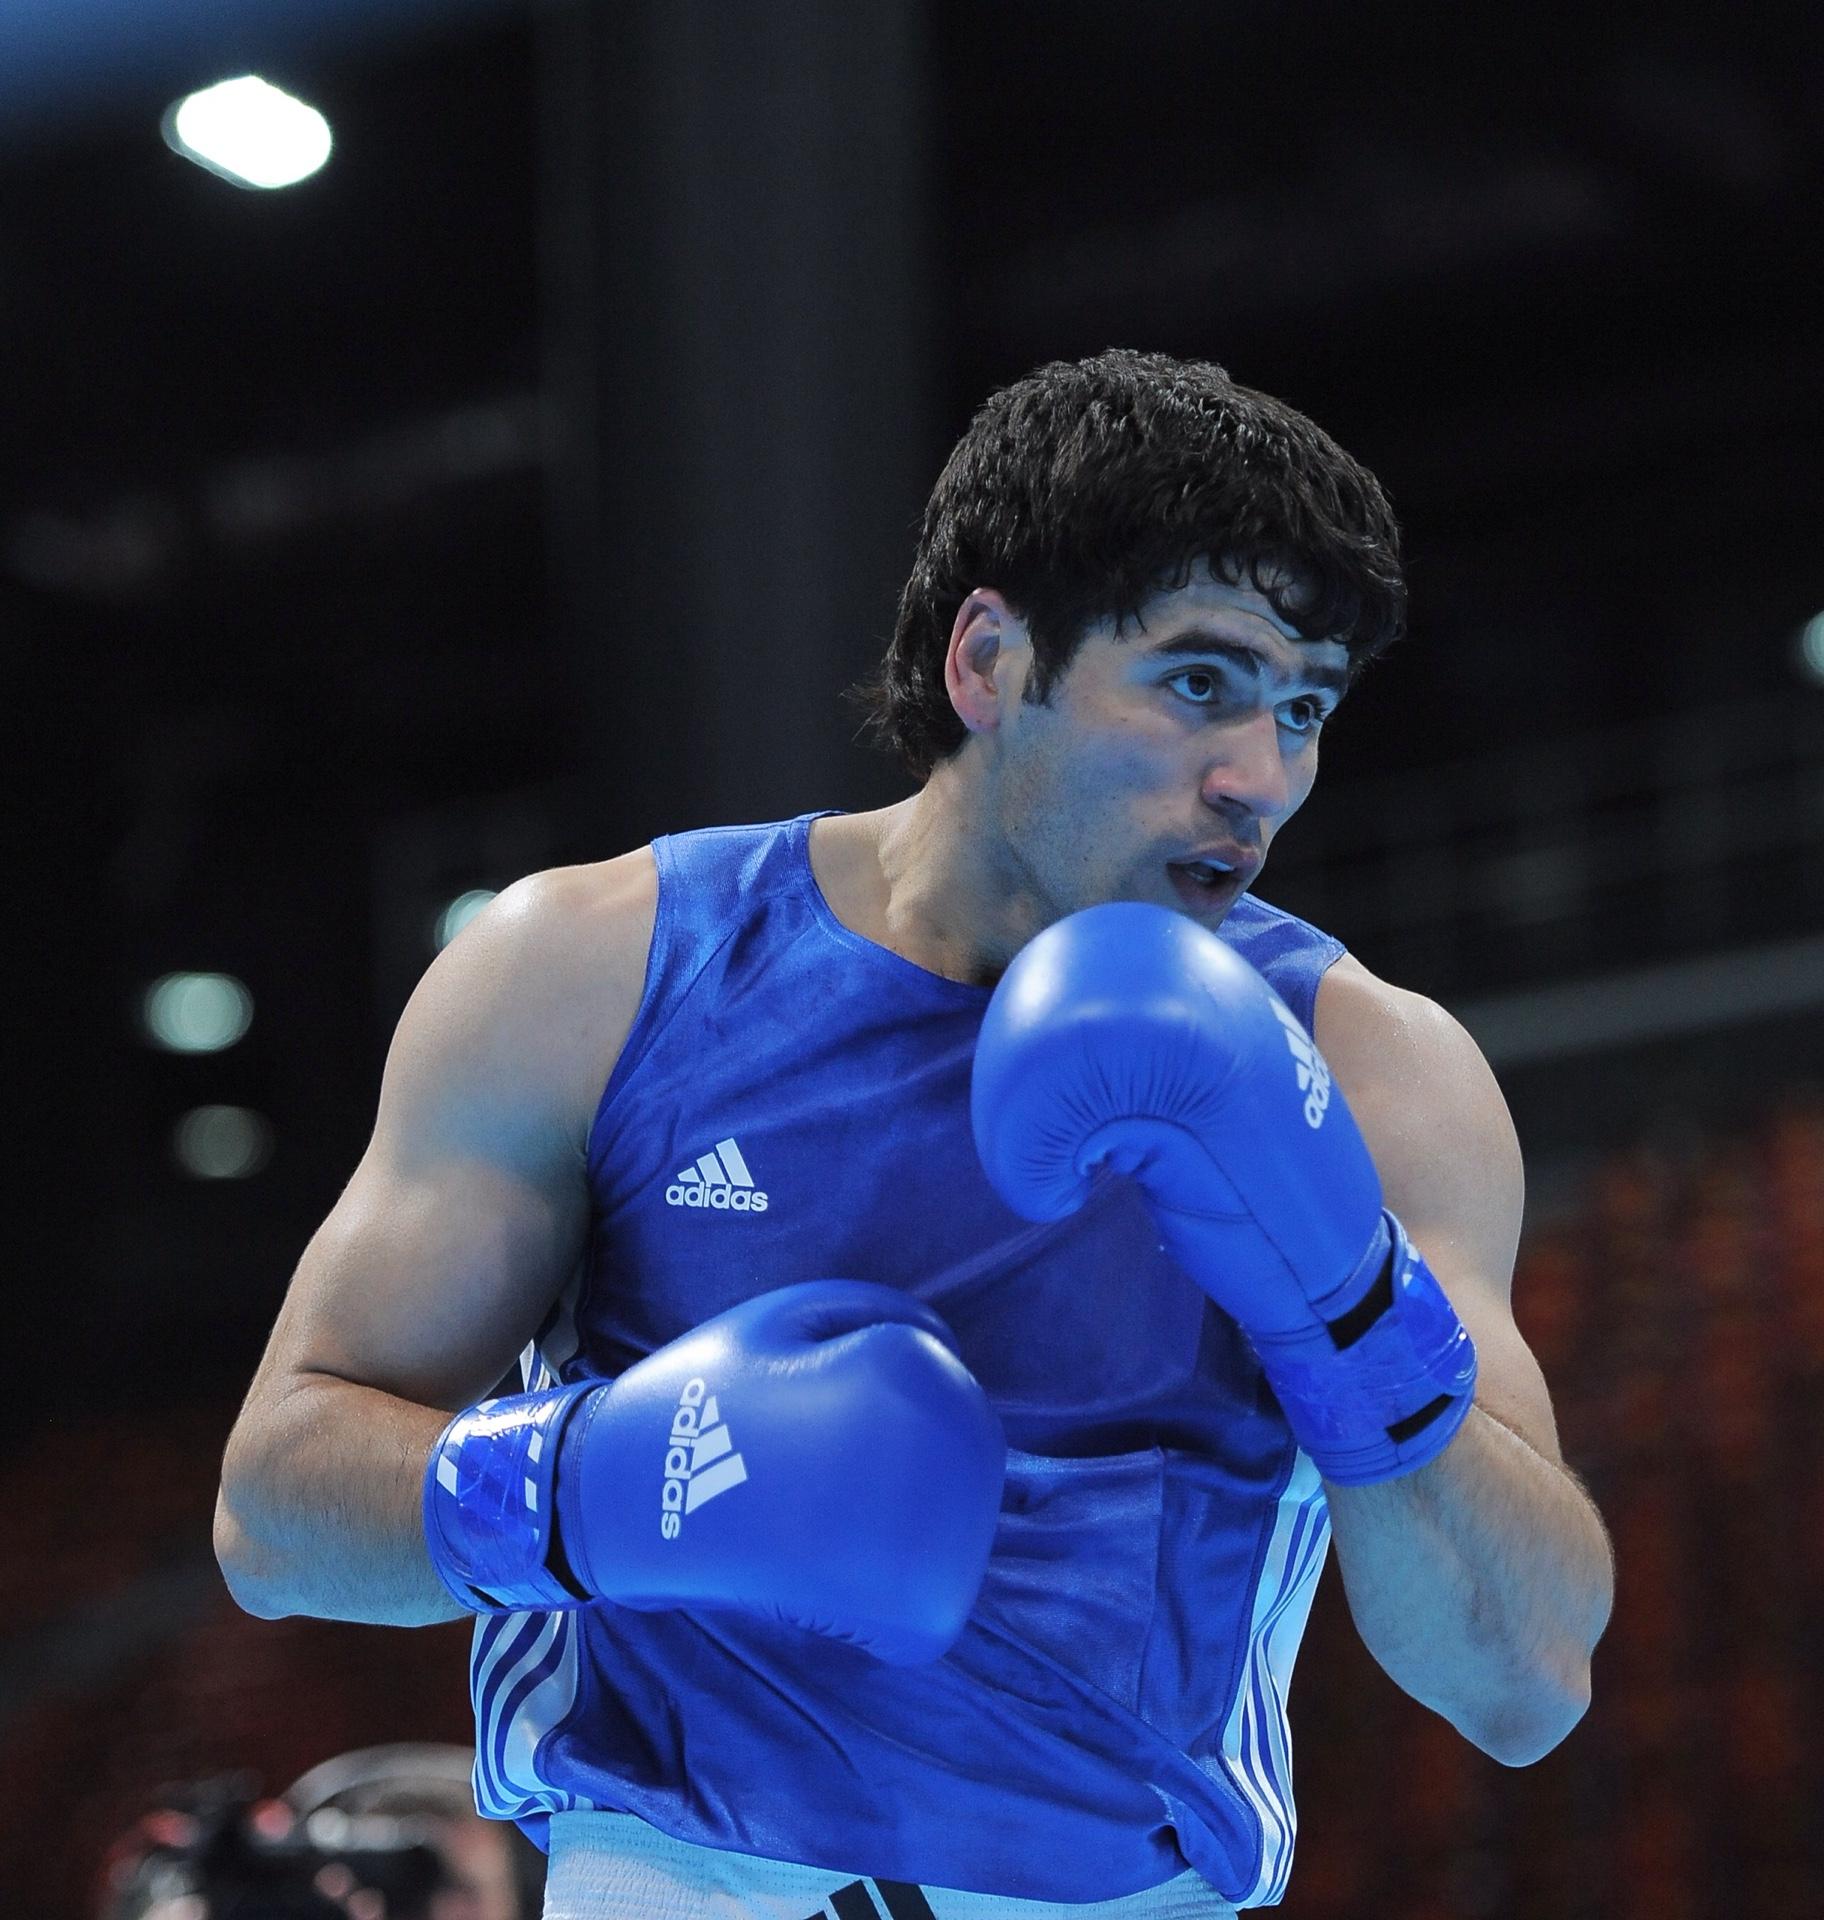 Baku 2017: Azerbaijan’s Rahimov grabs boxing silver